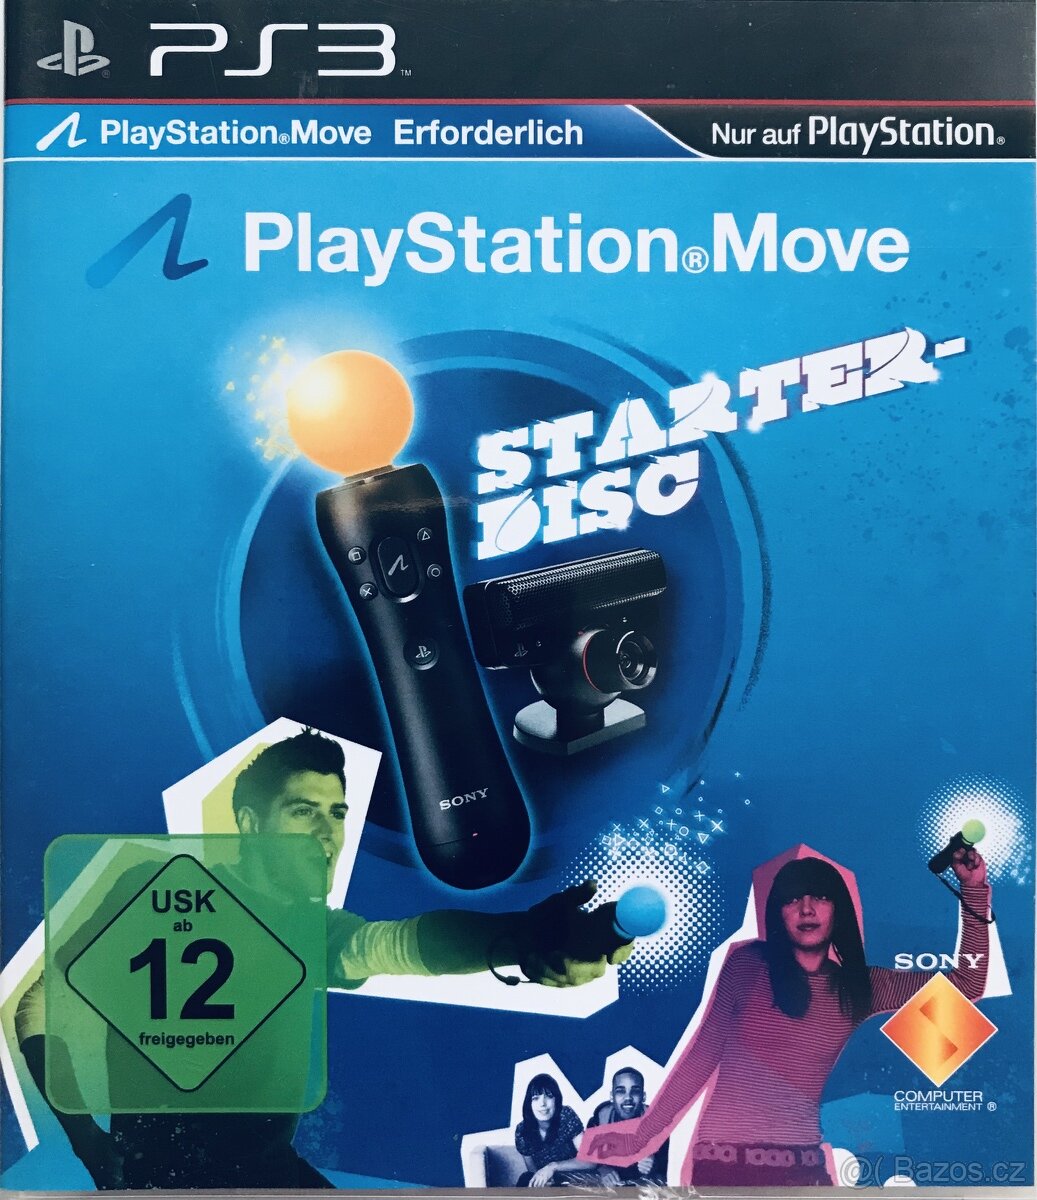 PS3 - PlayStation Move: Startovací disk s DEMO hrami